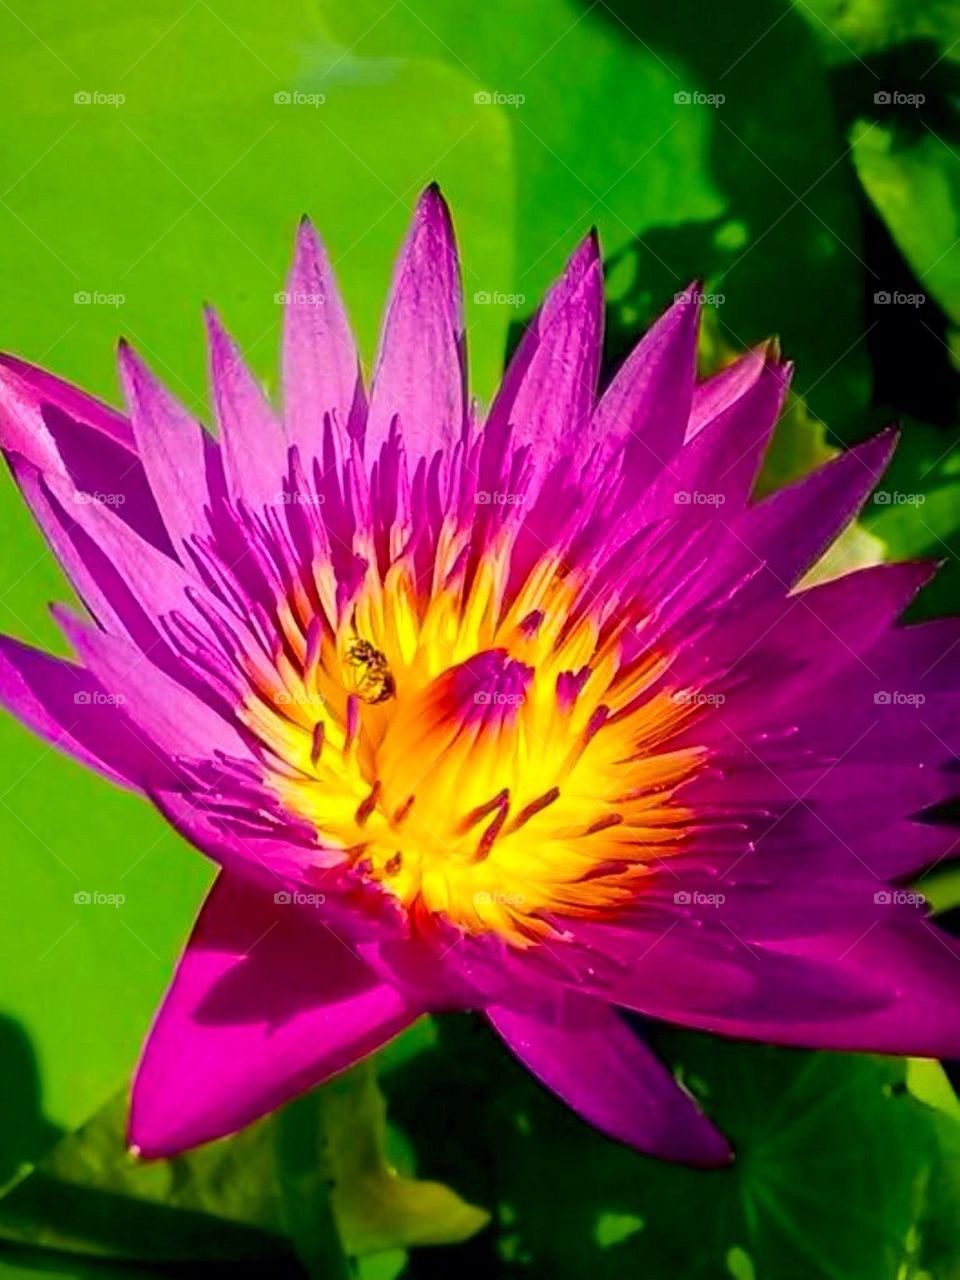 Lotus nature